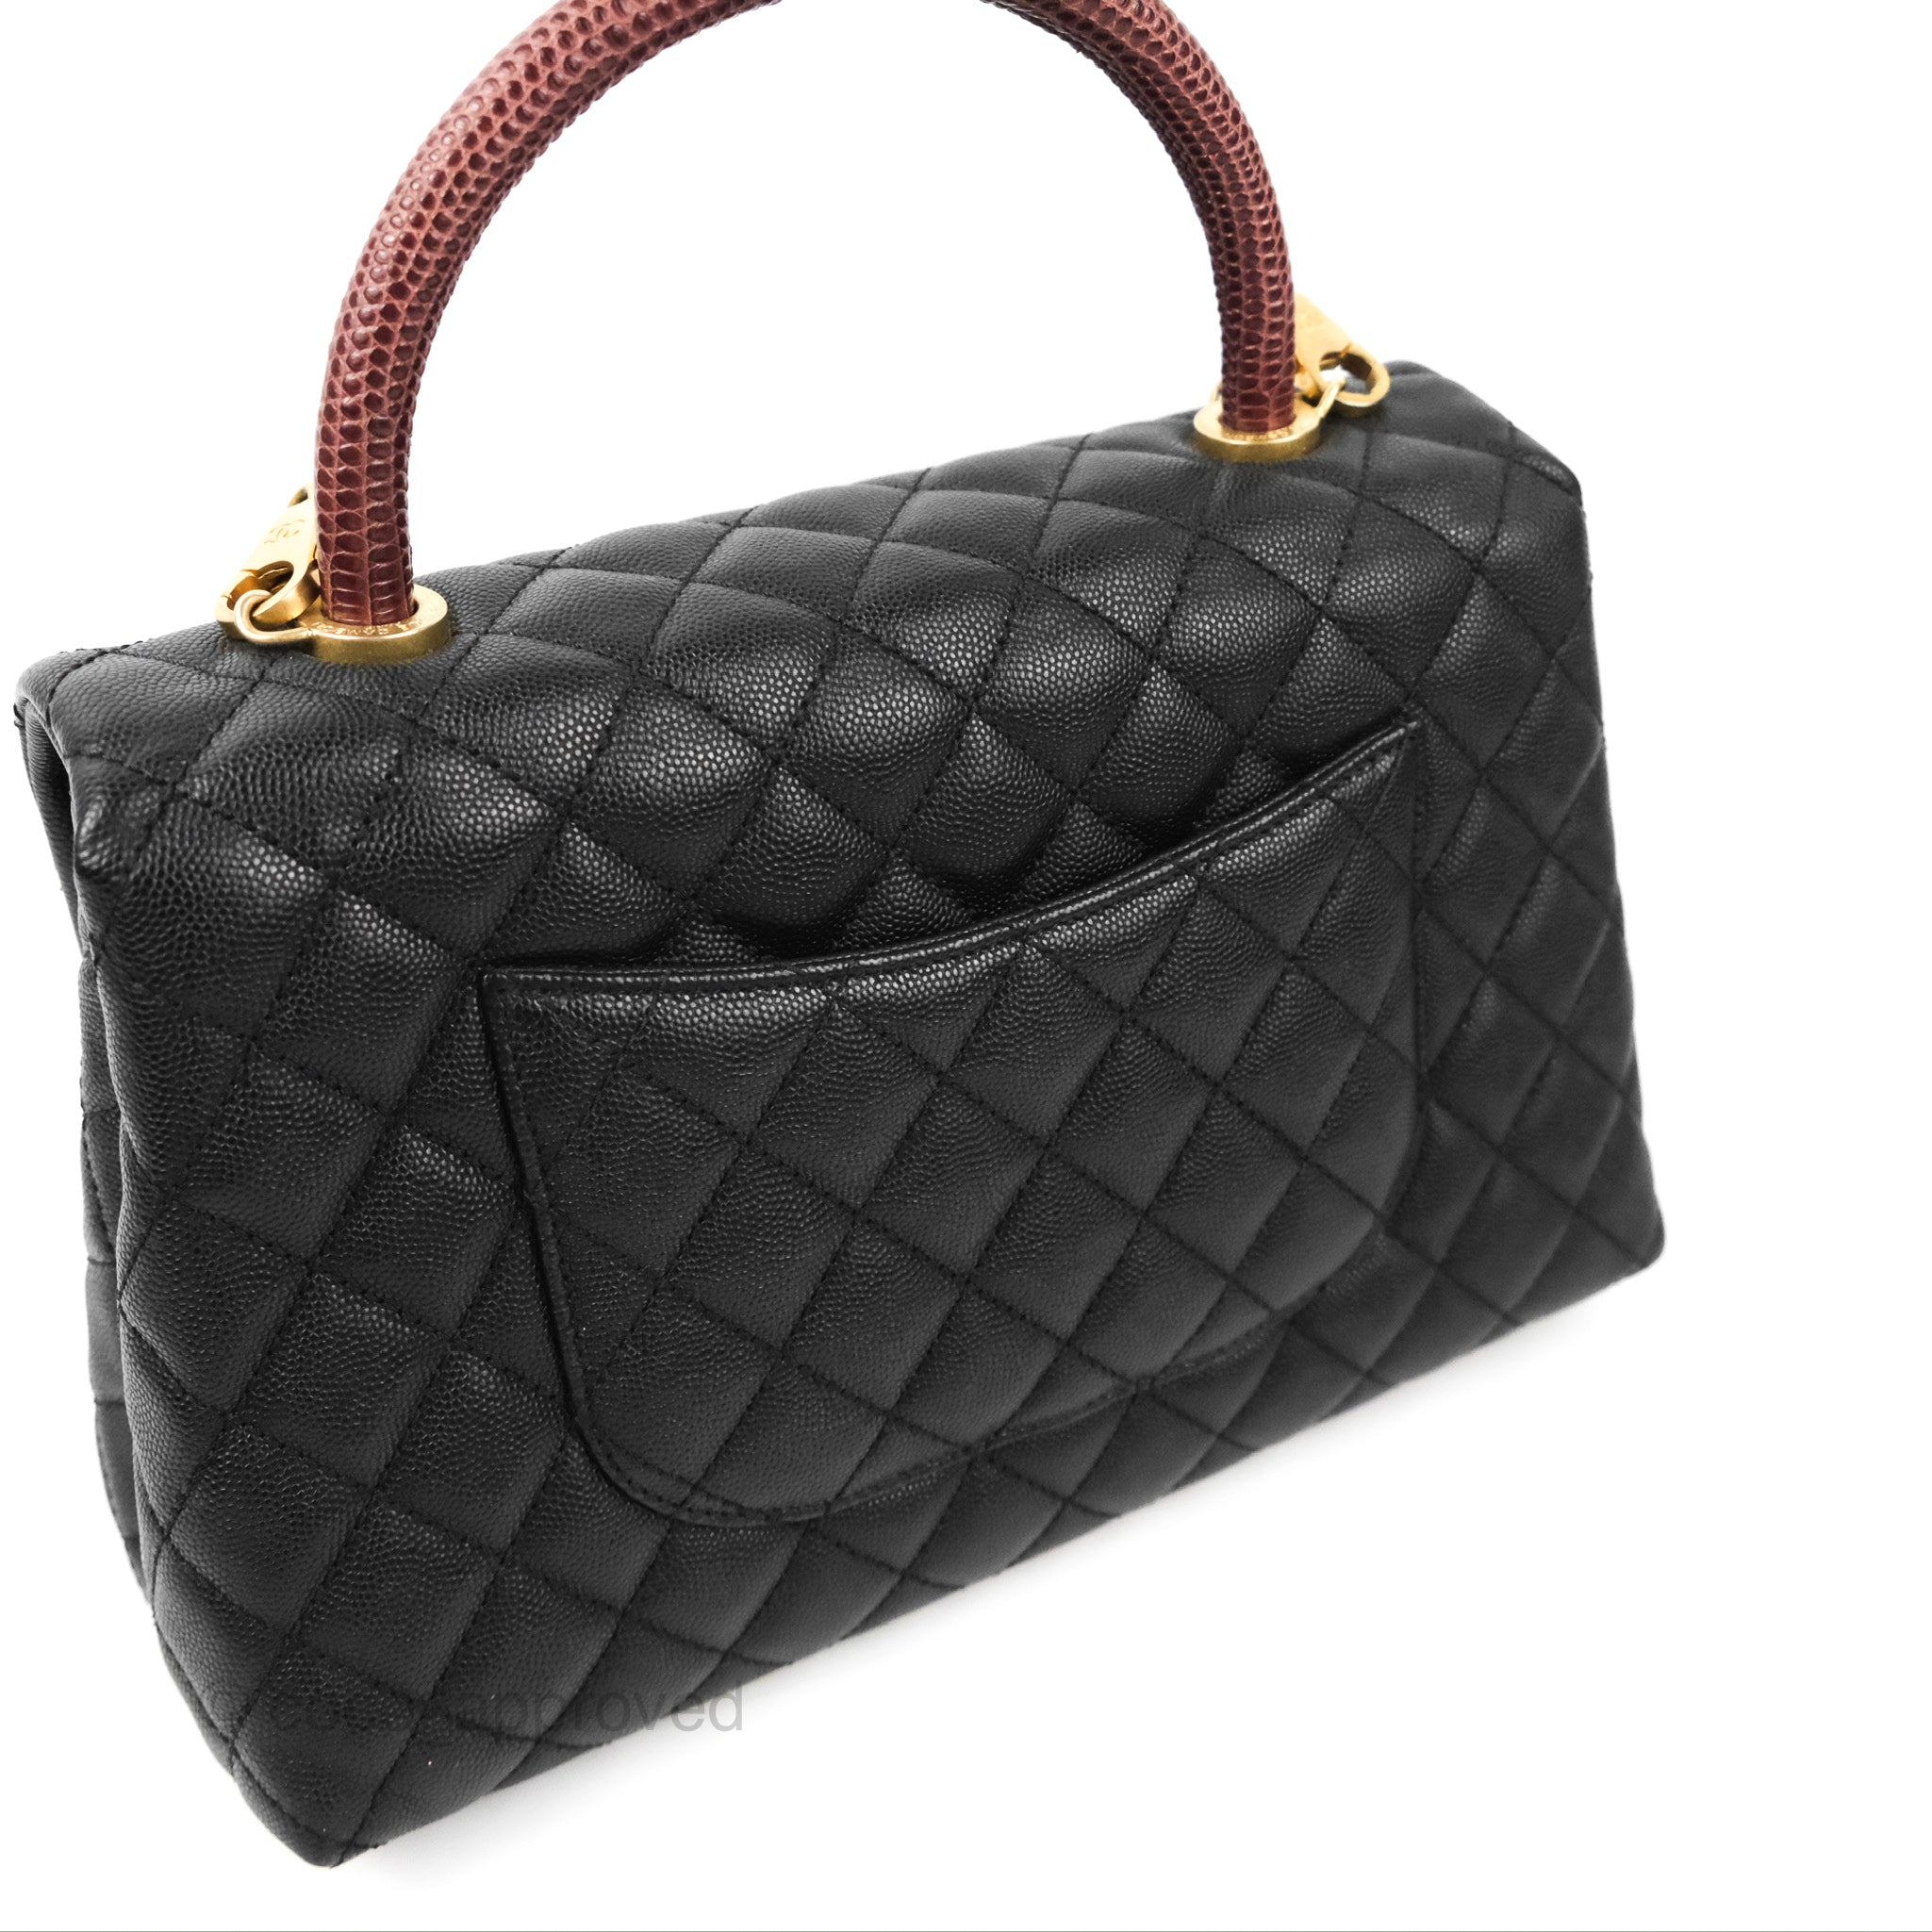 Chanel Medium Caviar Lizard-Trimmed Coco Handle Bag Large